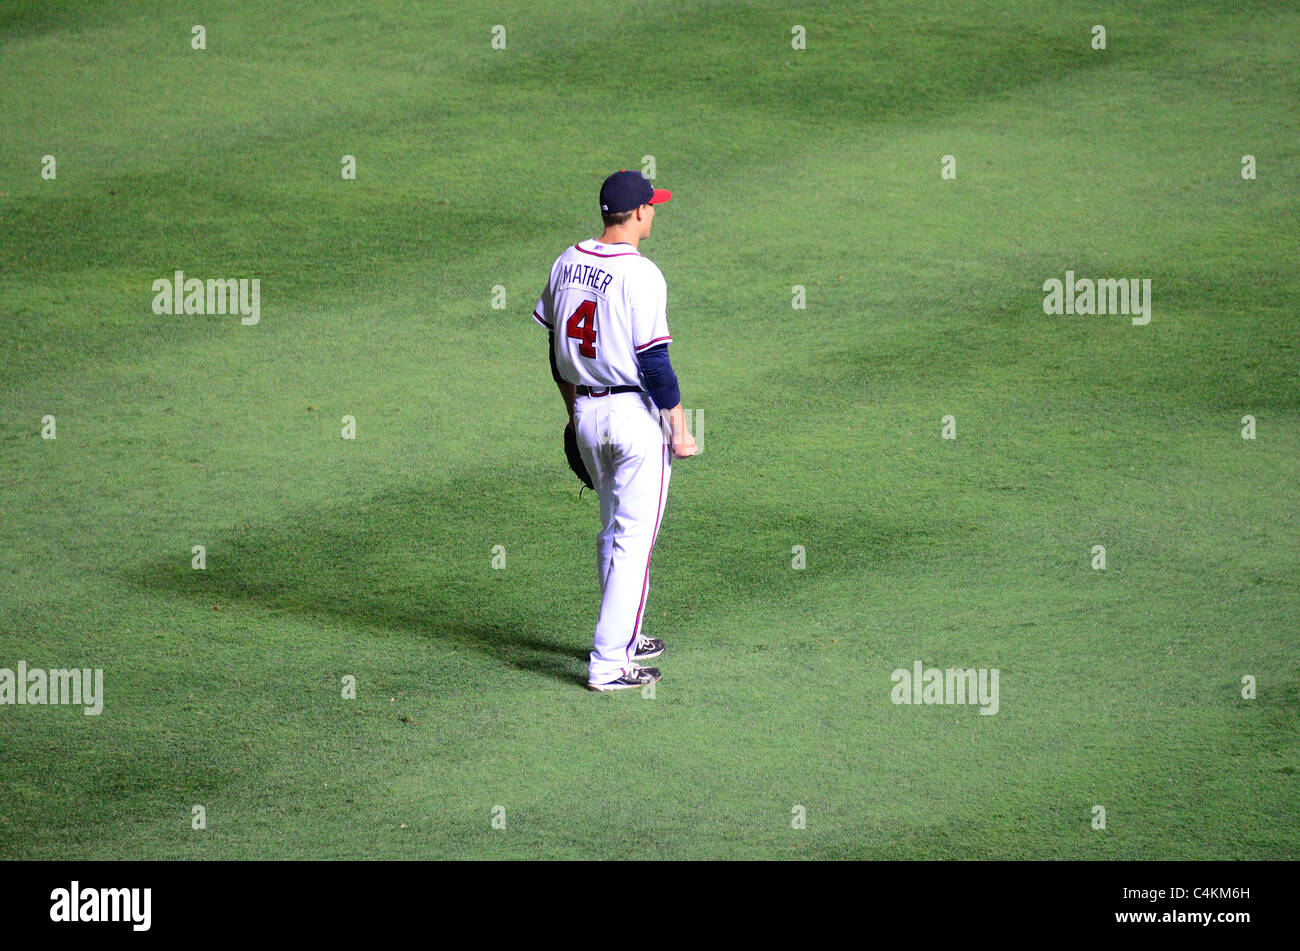 Atlanta, Georgia - 16. Juni 2011: Joe Mather von der Atlanta Braves Baseball-Team. Stockfoto